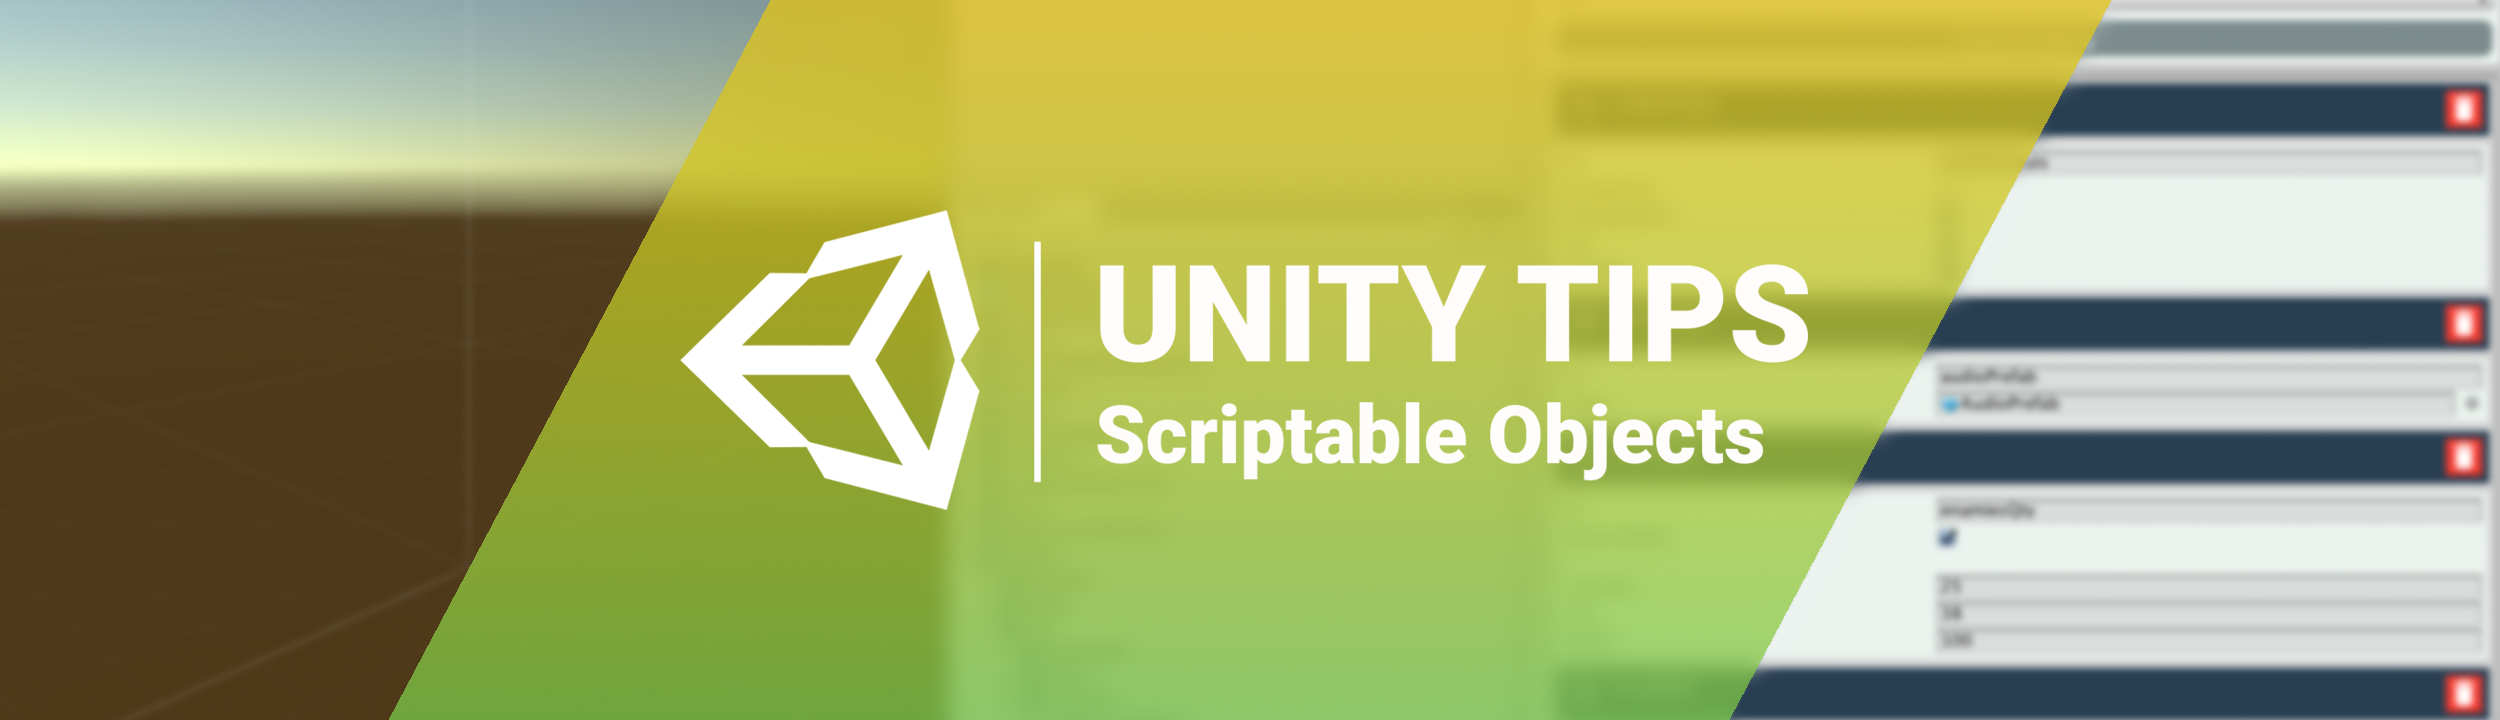 scriptable tiles unity